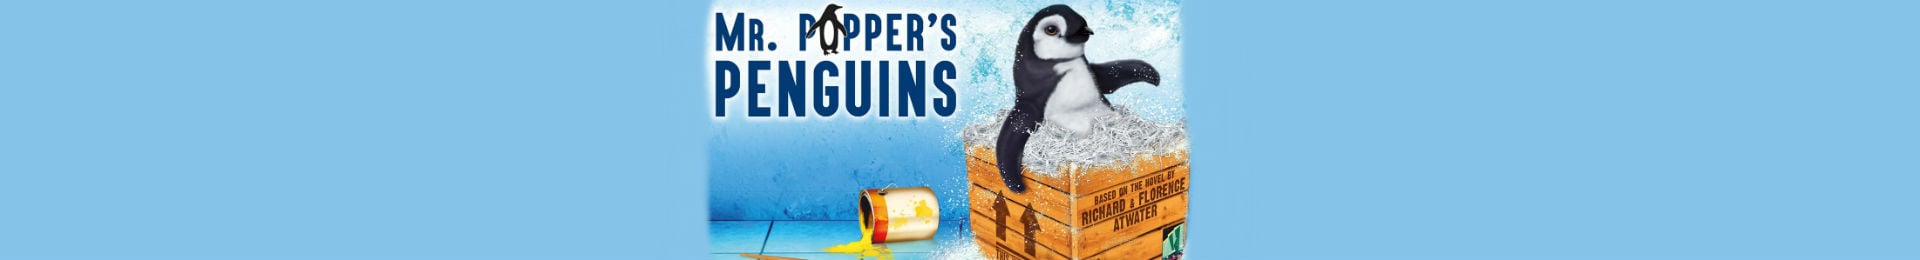 Mr Popper’s Penguins tickets